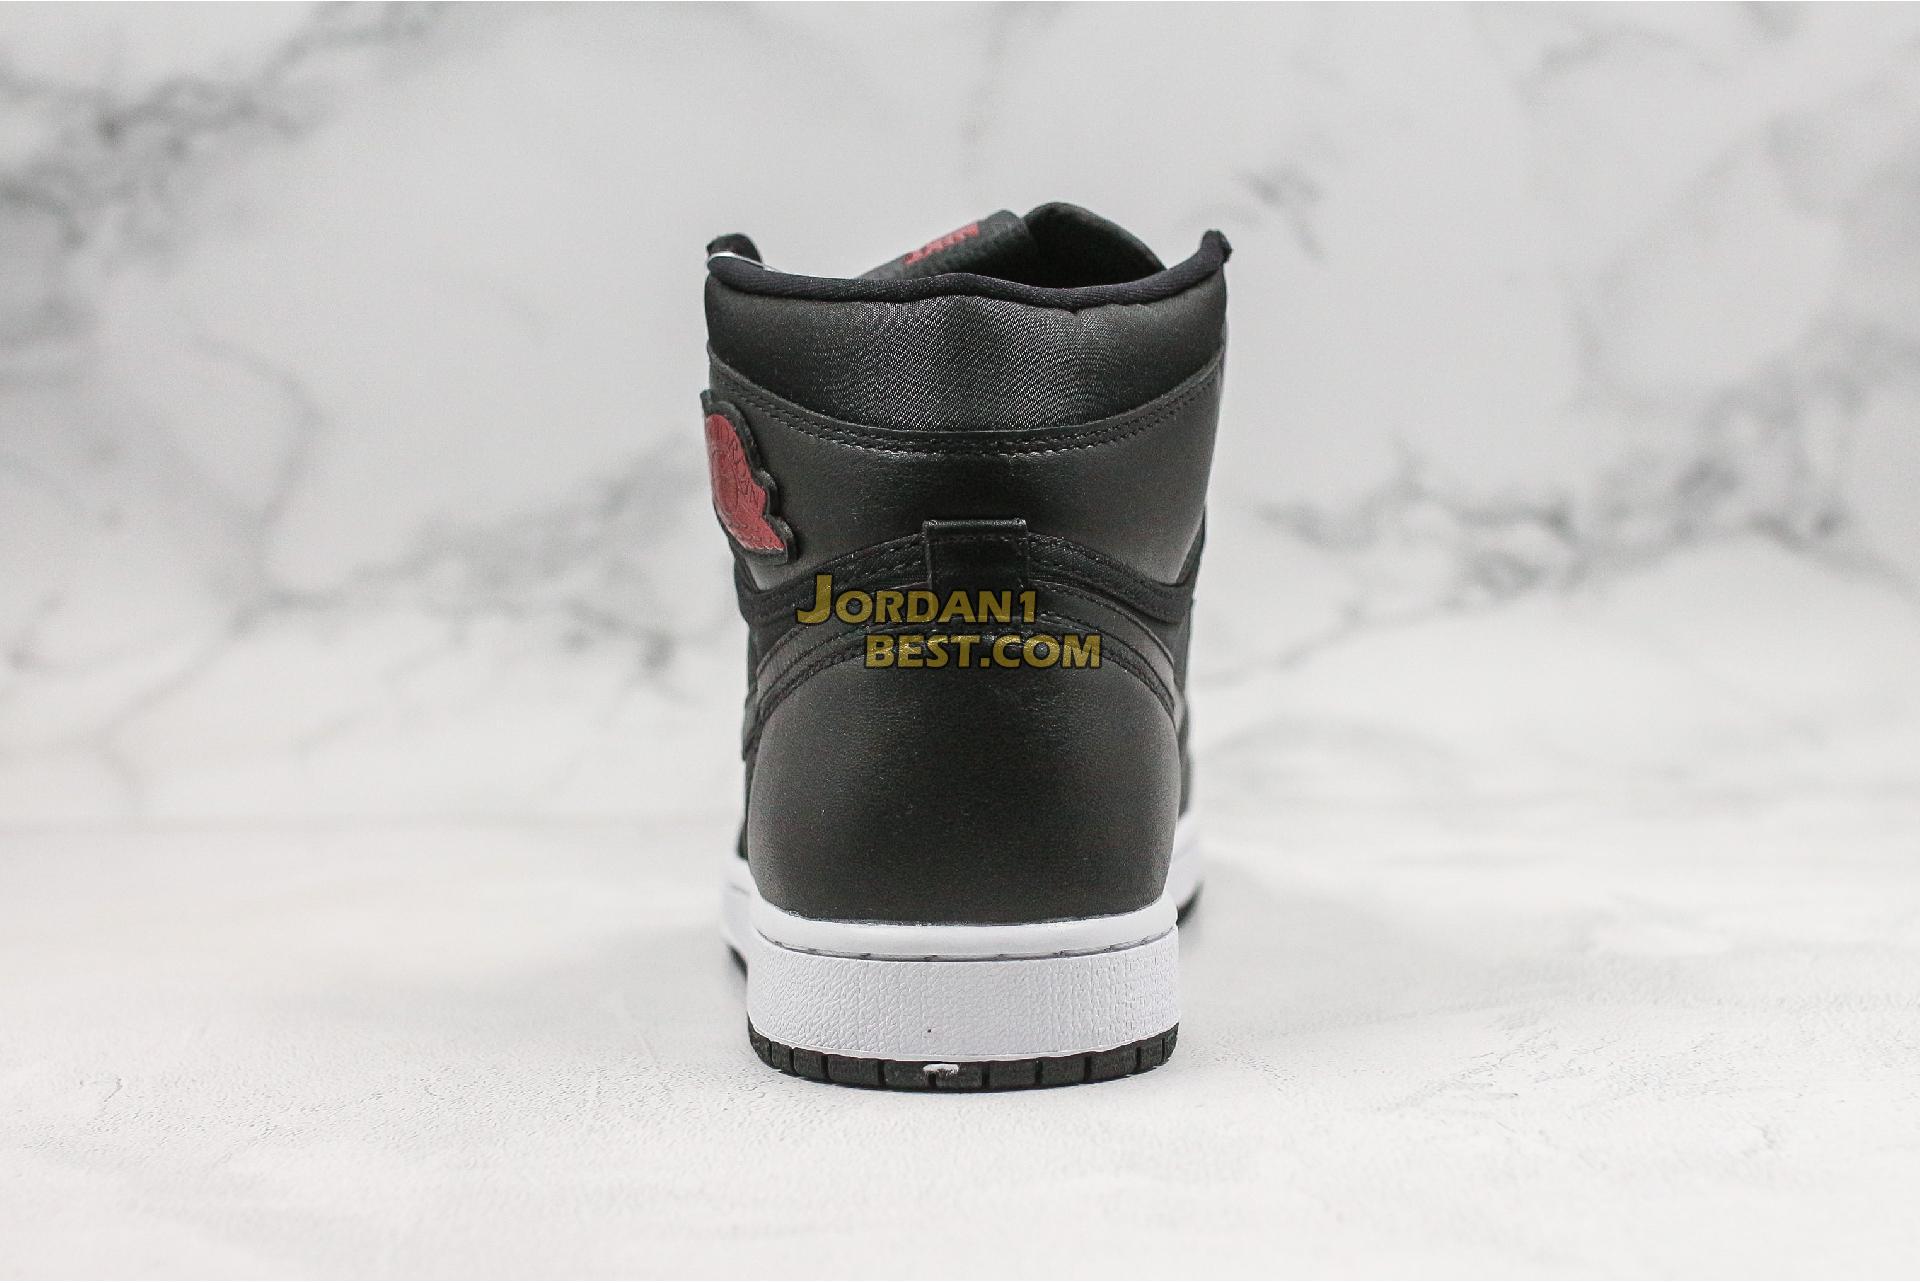 Air Jordan 1 Retro High OG "Black Gym Red" 555088-060 Mens